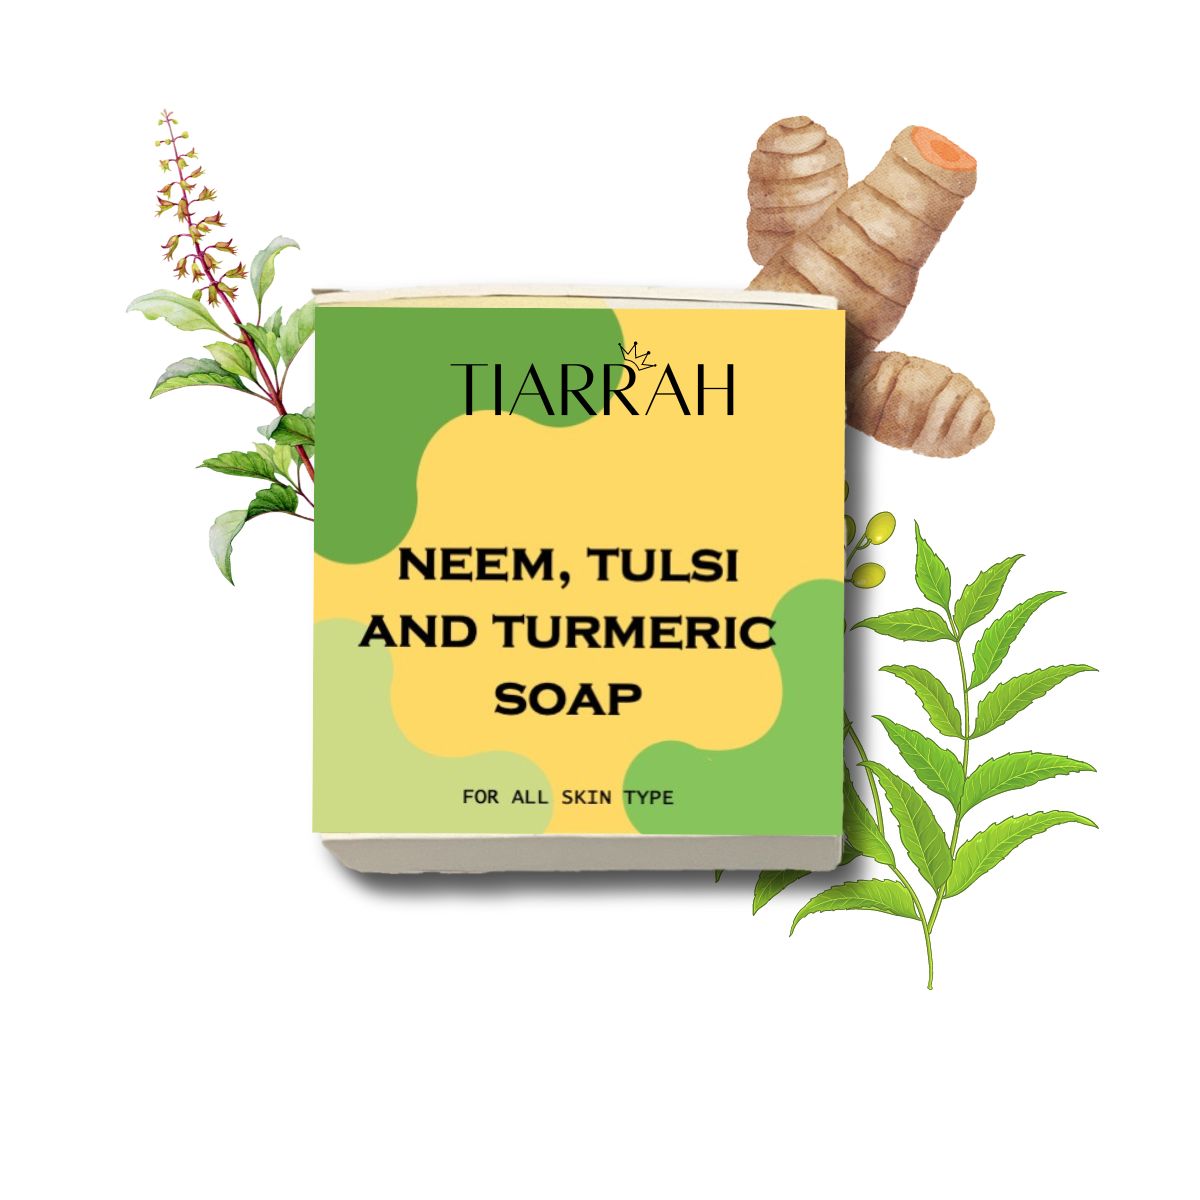 Tiarrah Neem, Tulsi, and Turmeric Soap: Natural, Organic, Non-Toxic - The Luxury Bath and Body Care Shop